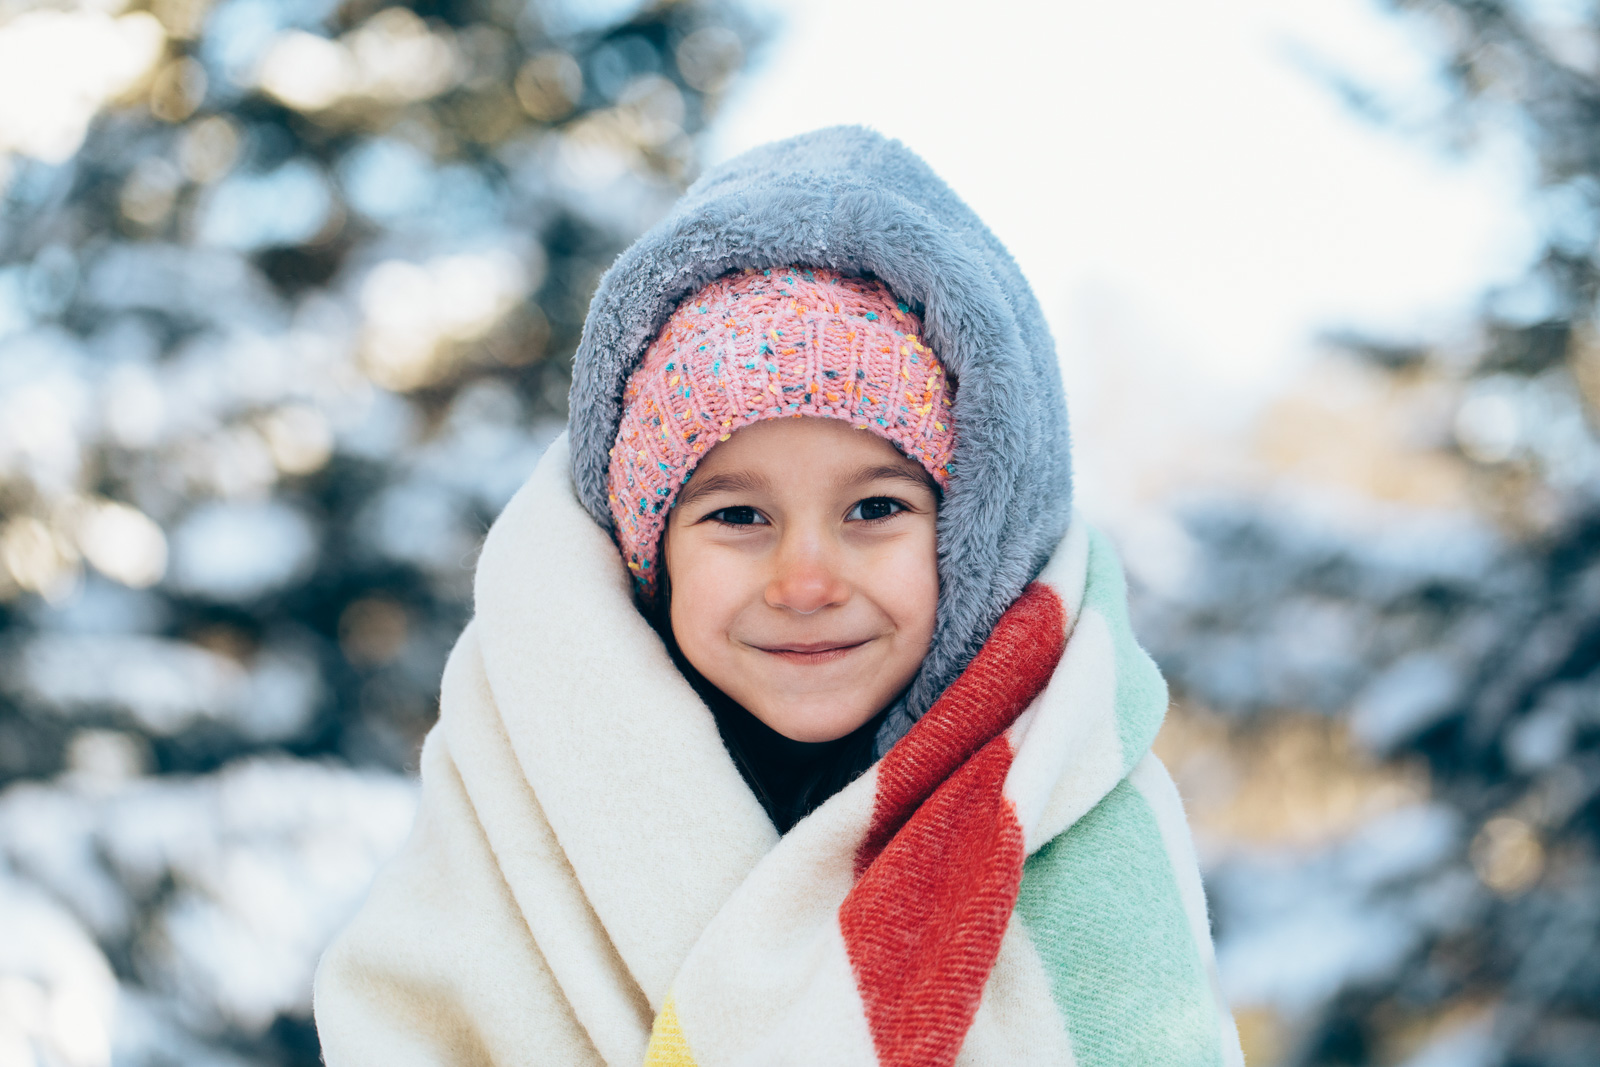 NH winter family lifestyle photography session by Birch Blaze Studios. https://birchblaze.com